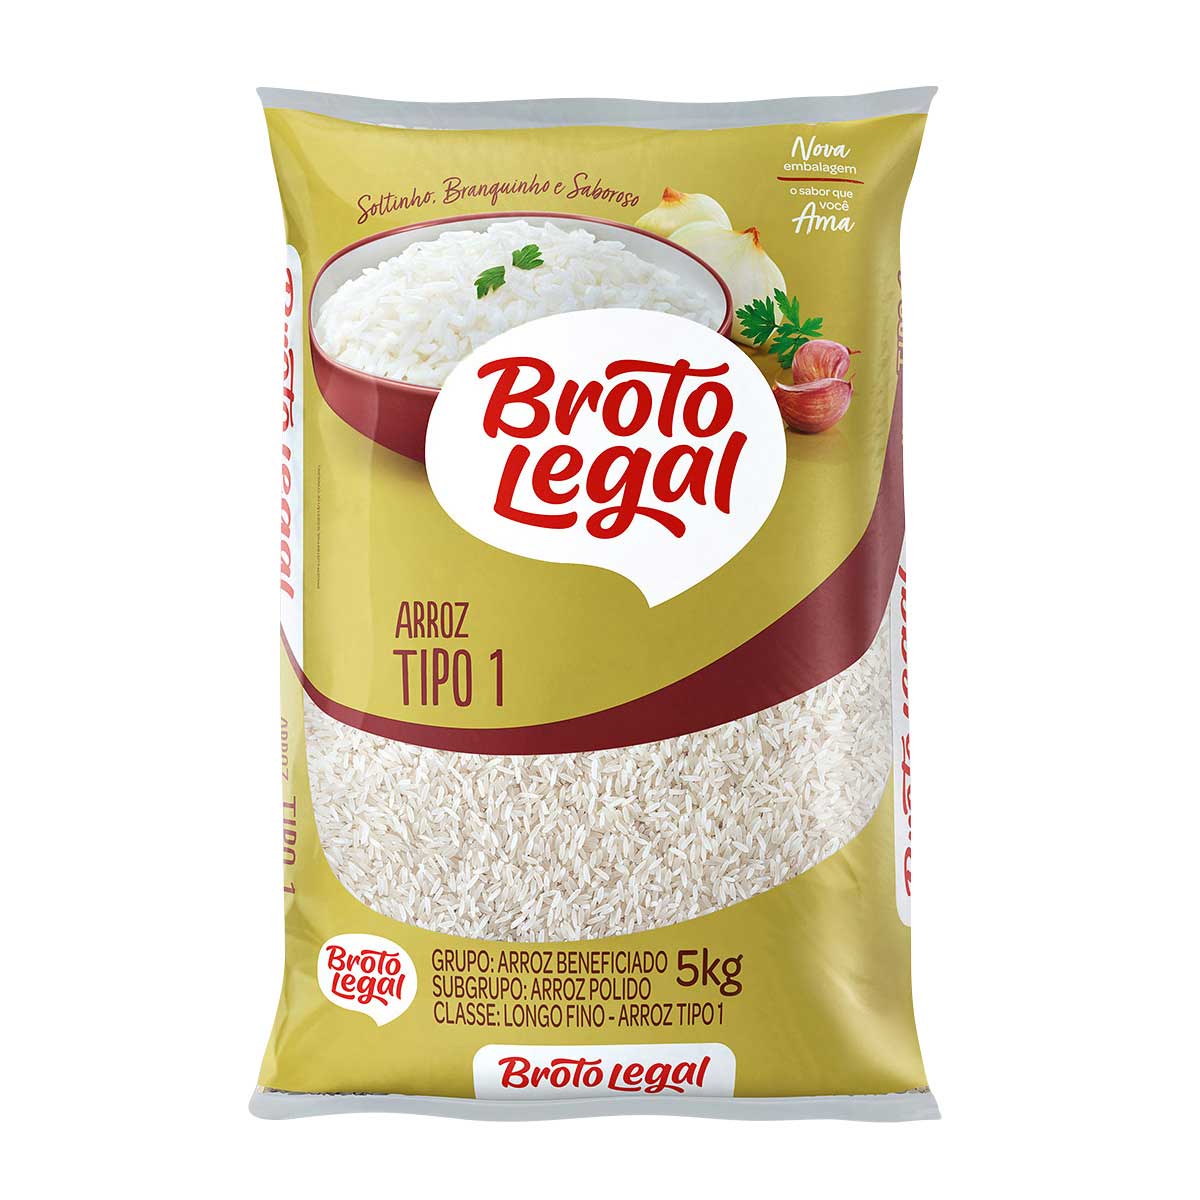 Arroz Broto Legal 5kg - Rice Sprout Legal